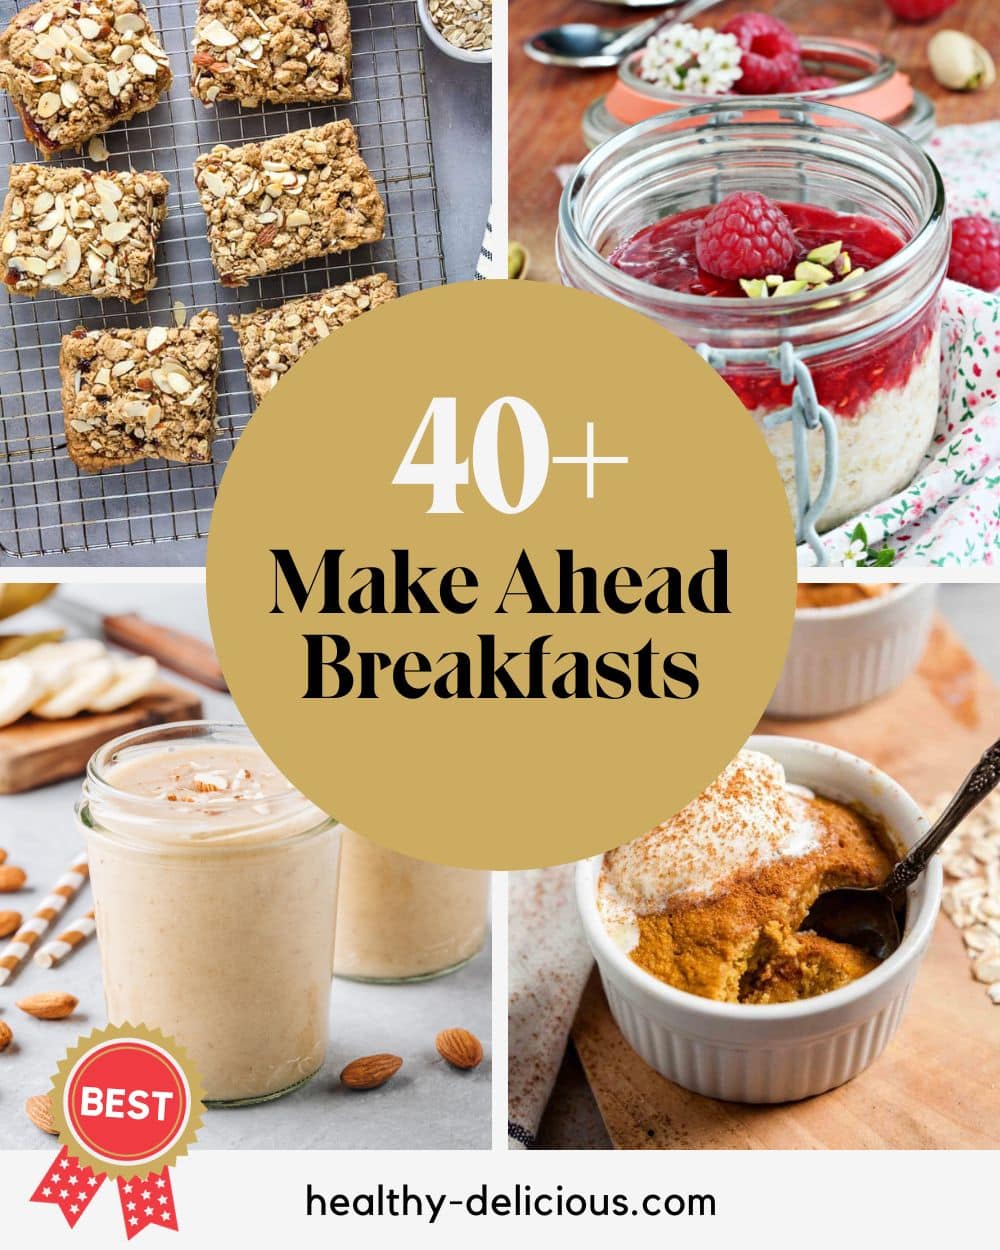 https://www.healthy-delicious.com/wp-content/uploads/2015/02/40-make-ahead-breakfast-recipes.jpg